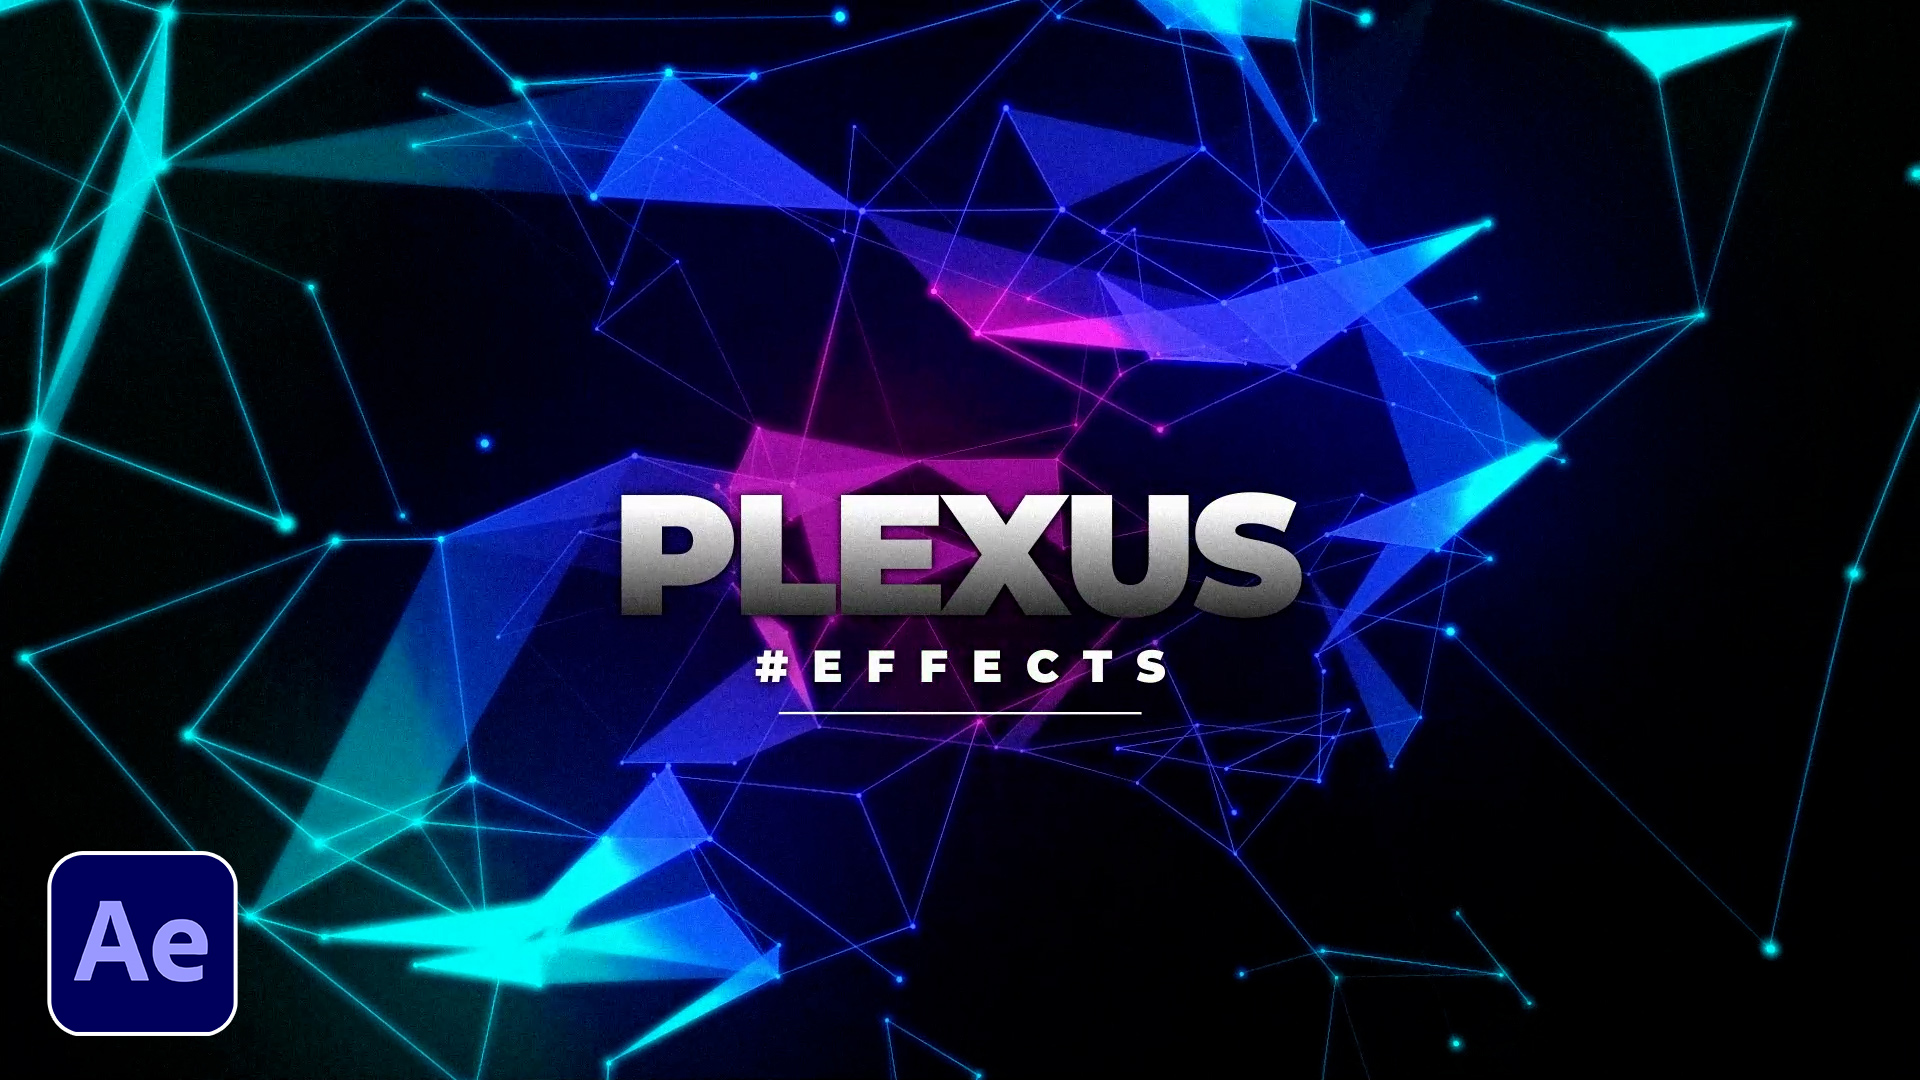 plexus 2 after effects download